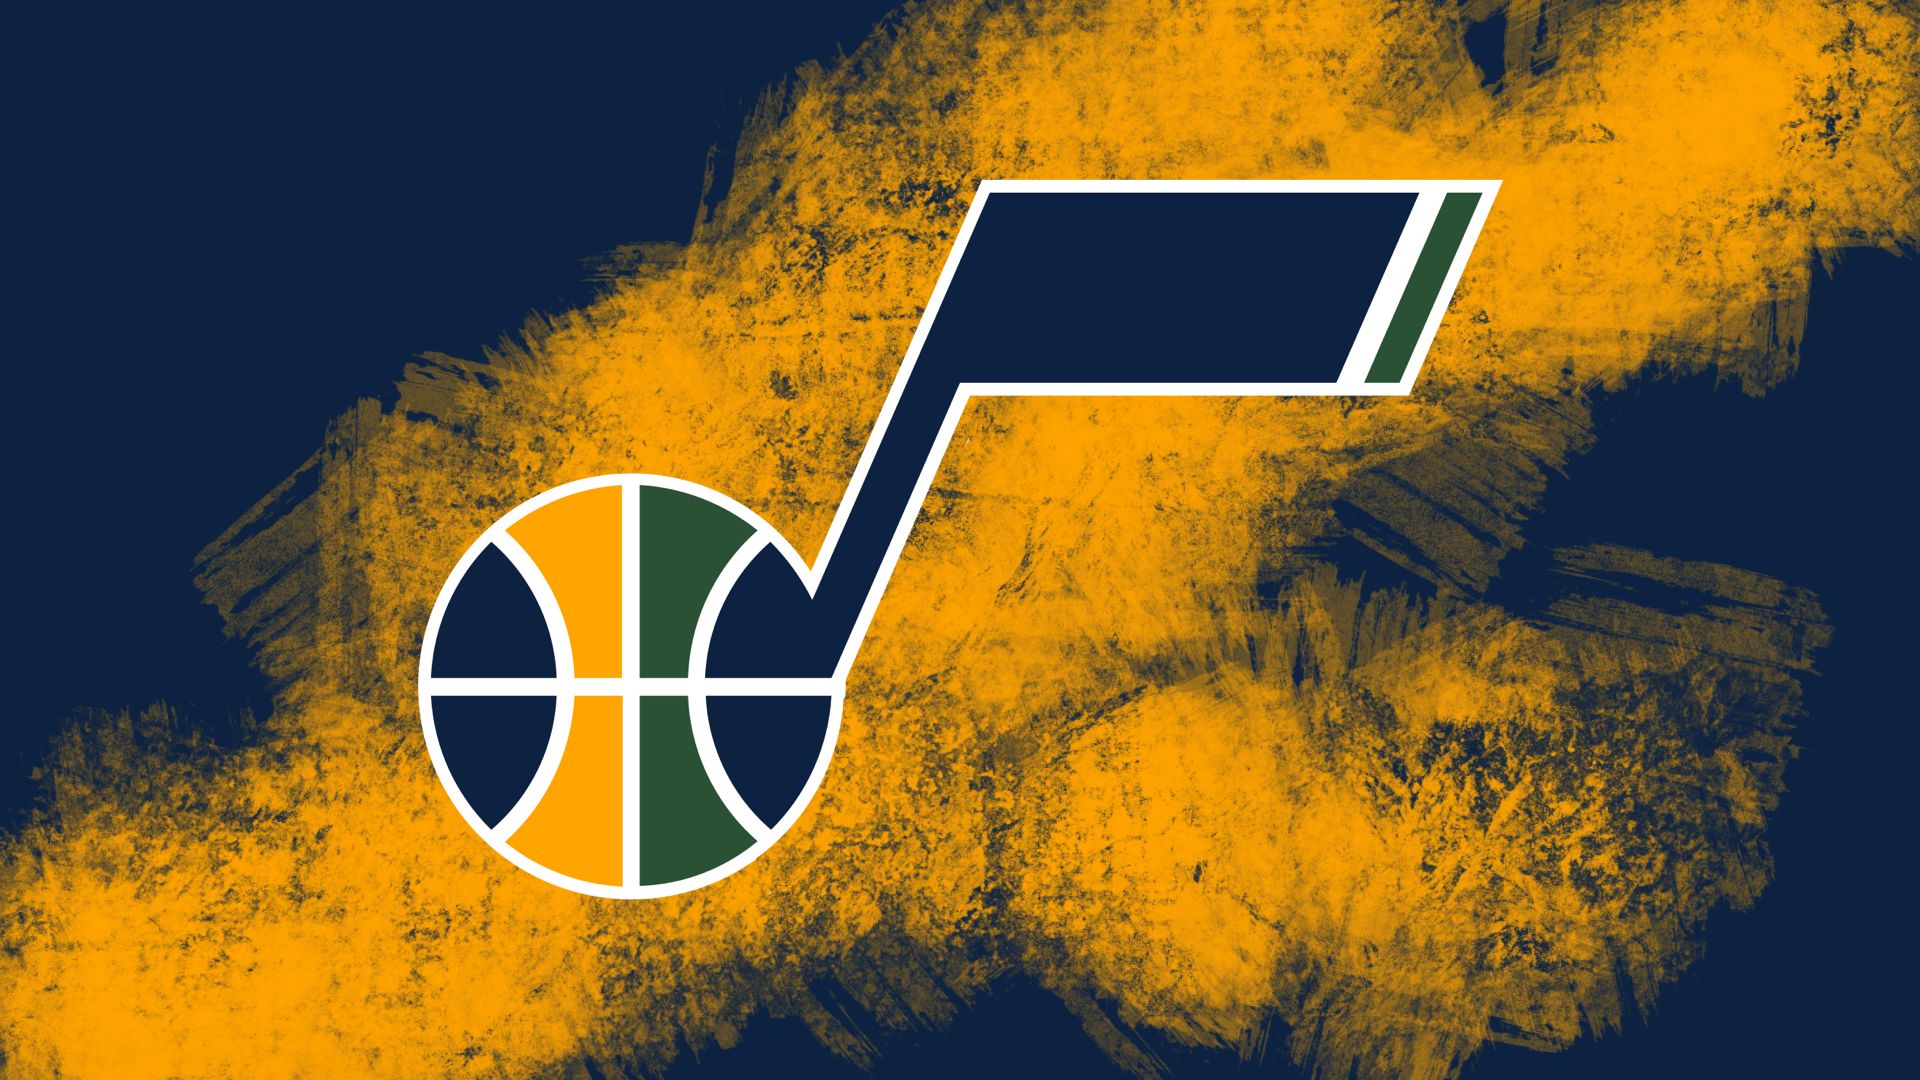 Descarga gratuita de fondo de pantalla para móvil de Baloncesto, Logo, Emblema, Nba, Deporte, Jazz De Utah.